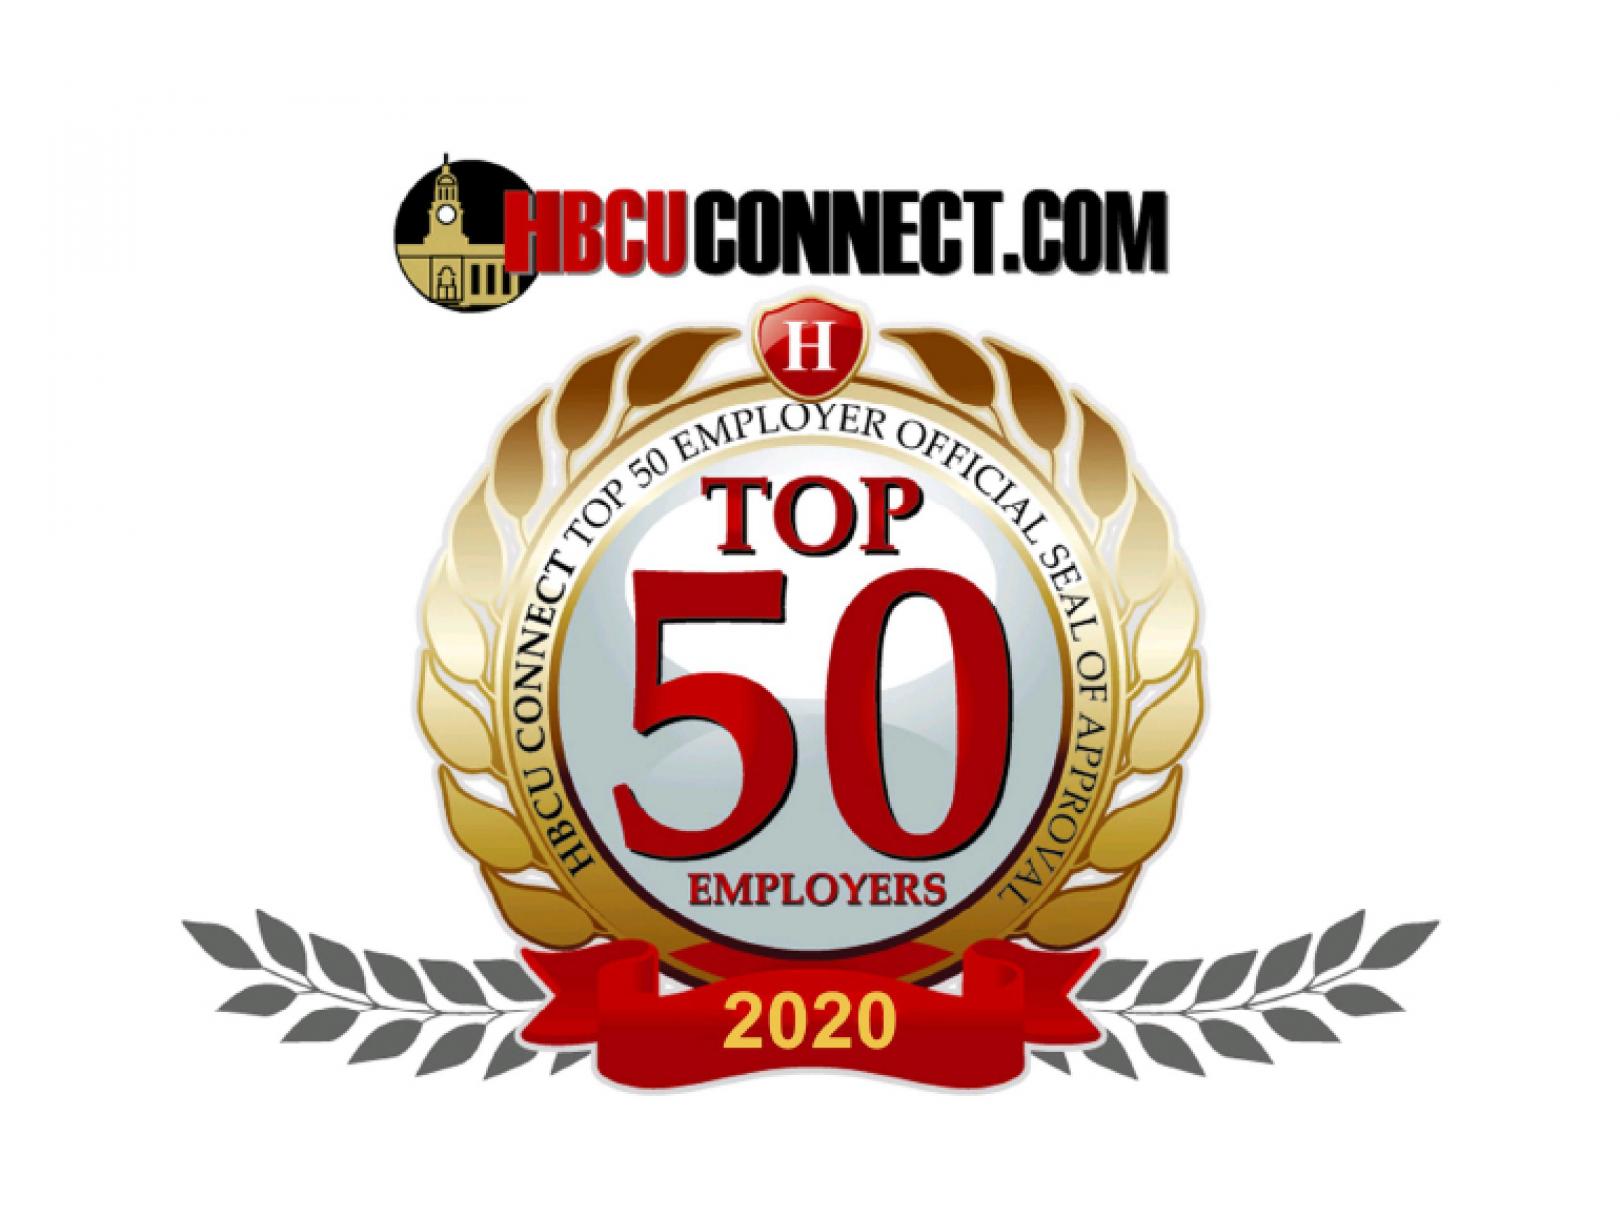 Top 50 Employers of HBCUs logo